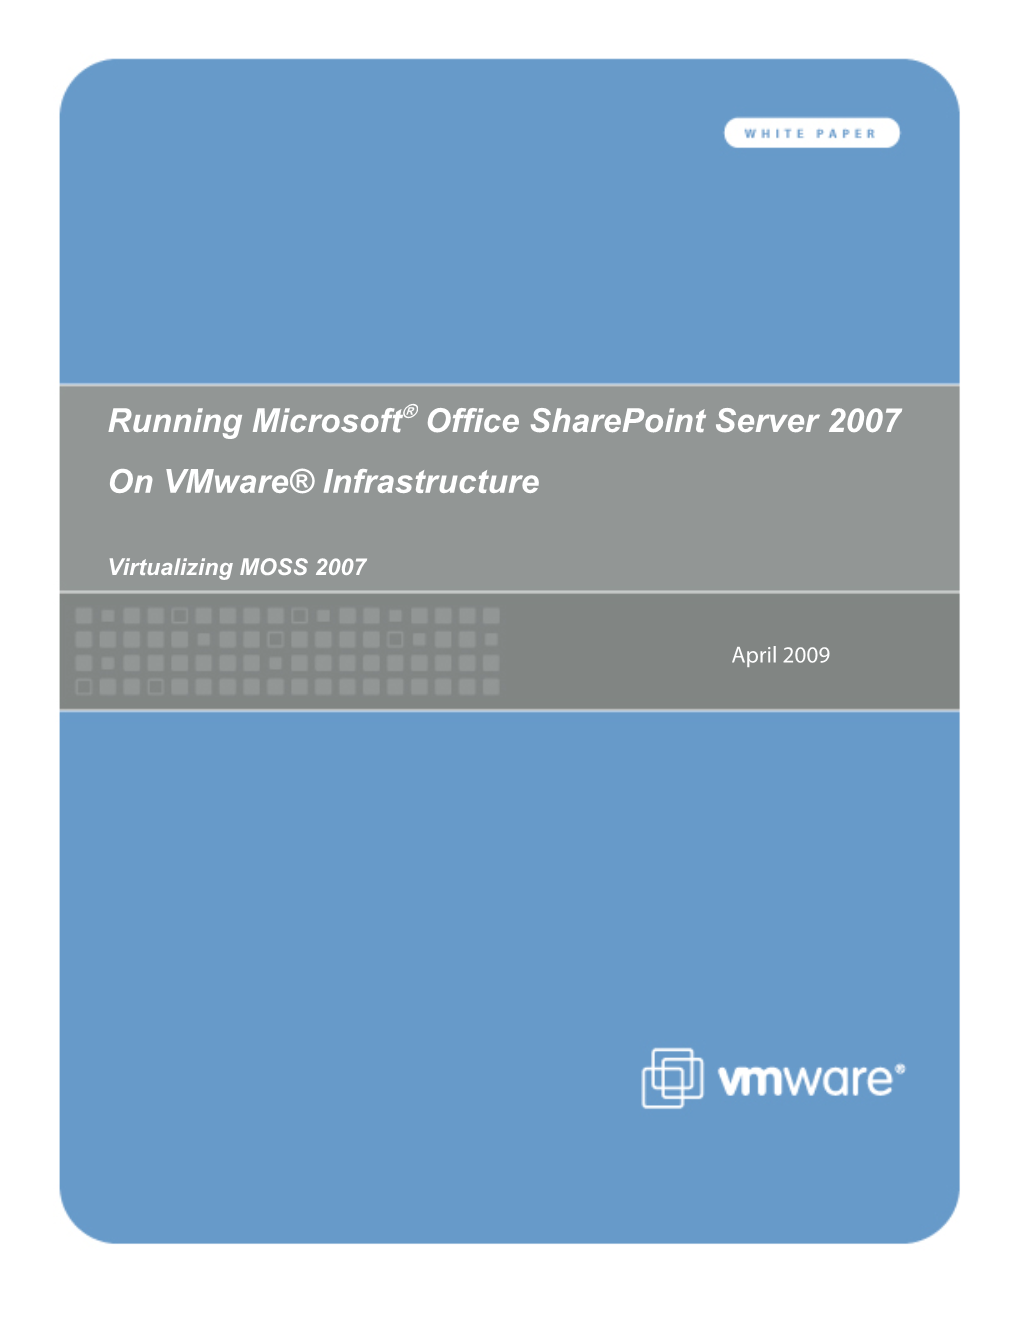 Office Sharepoint Server 2007 on Vmware® Infrastructure